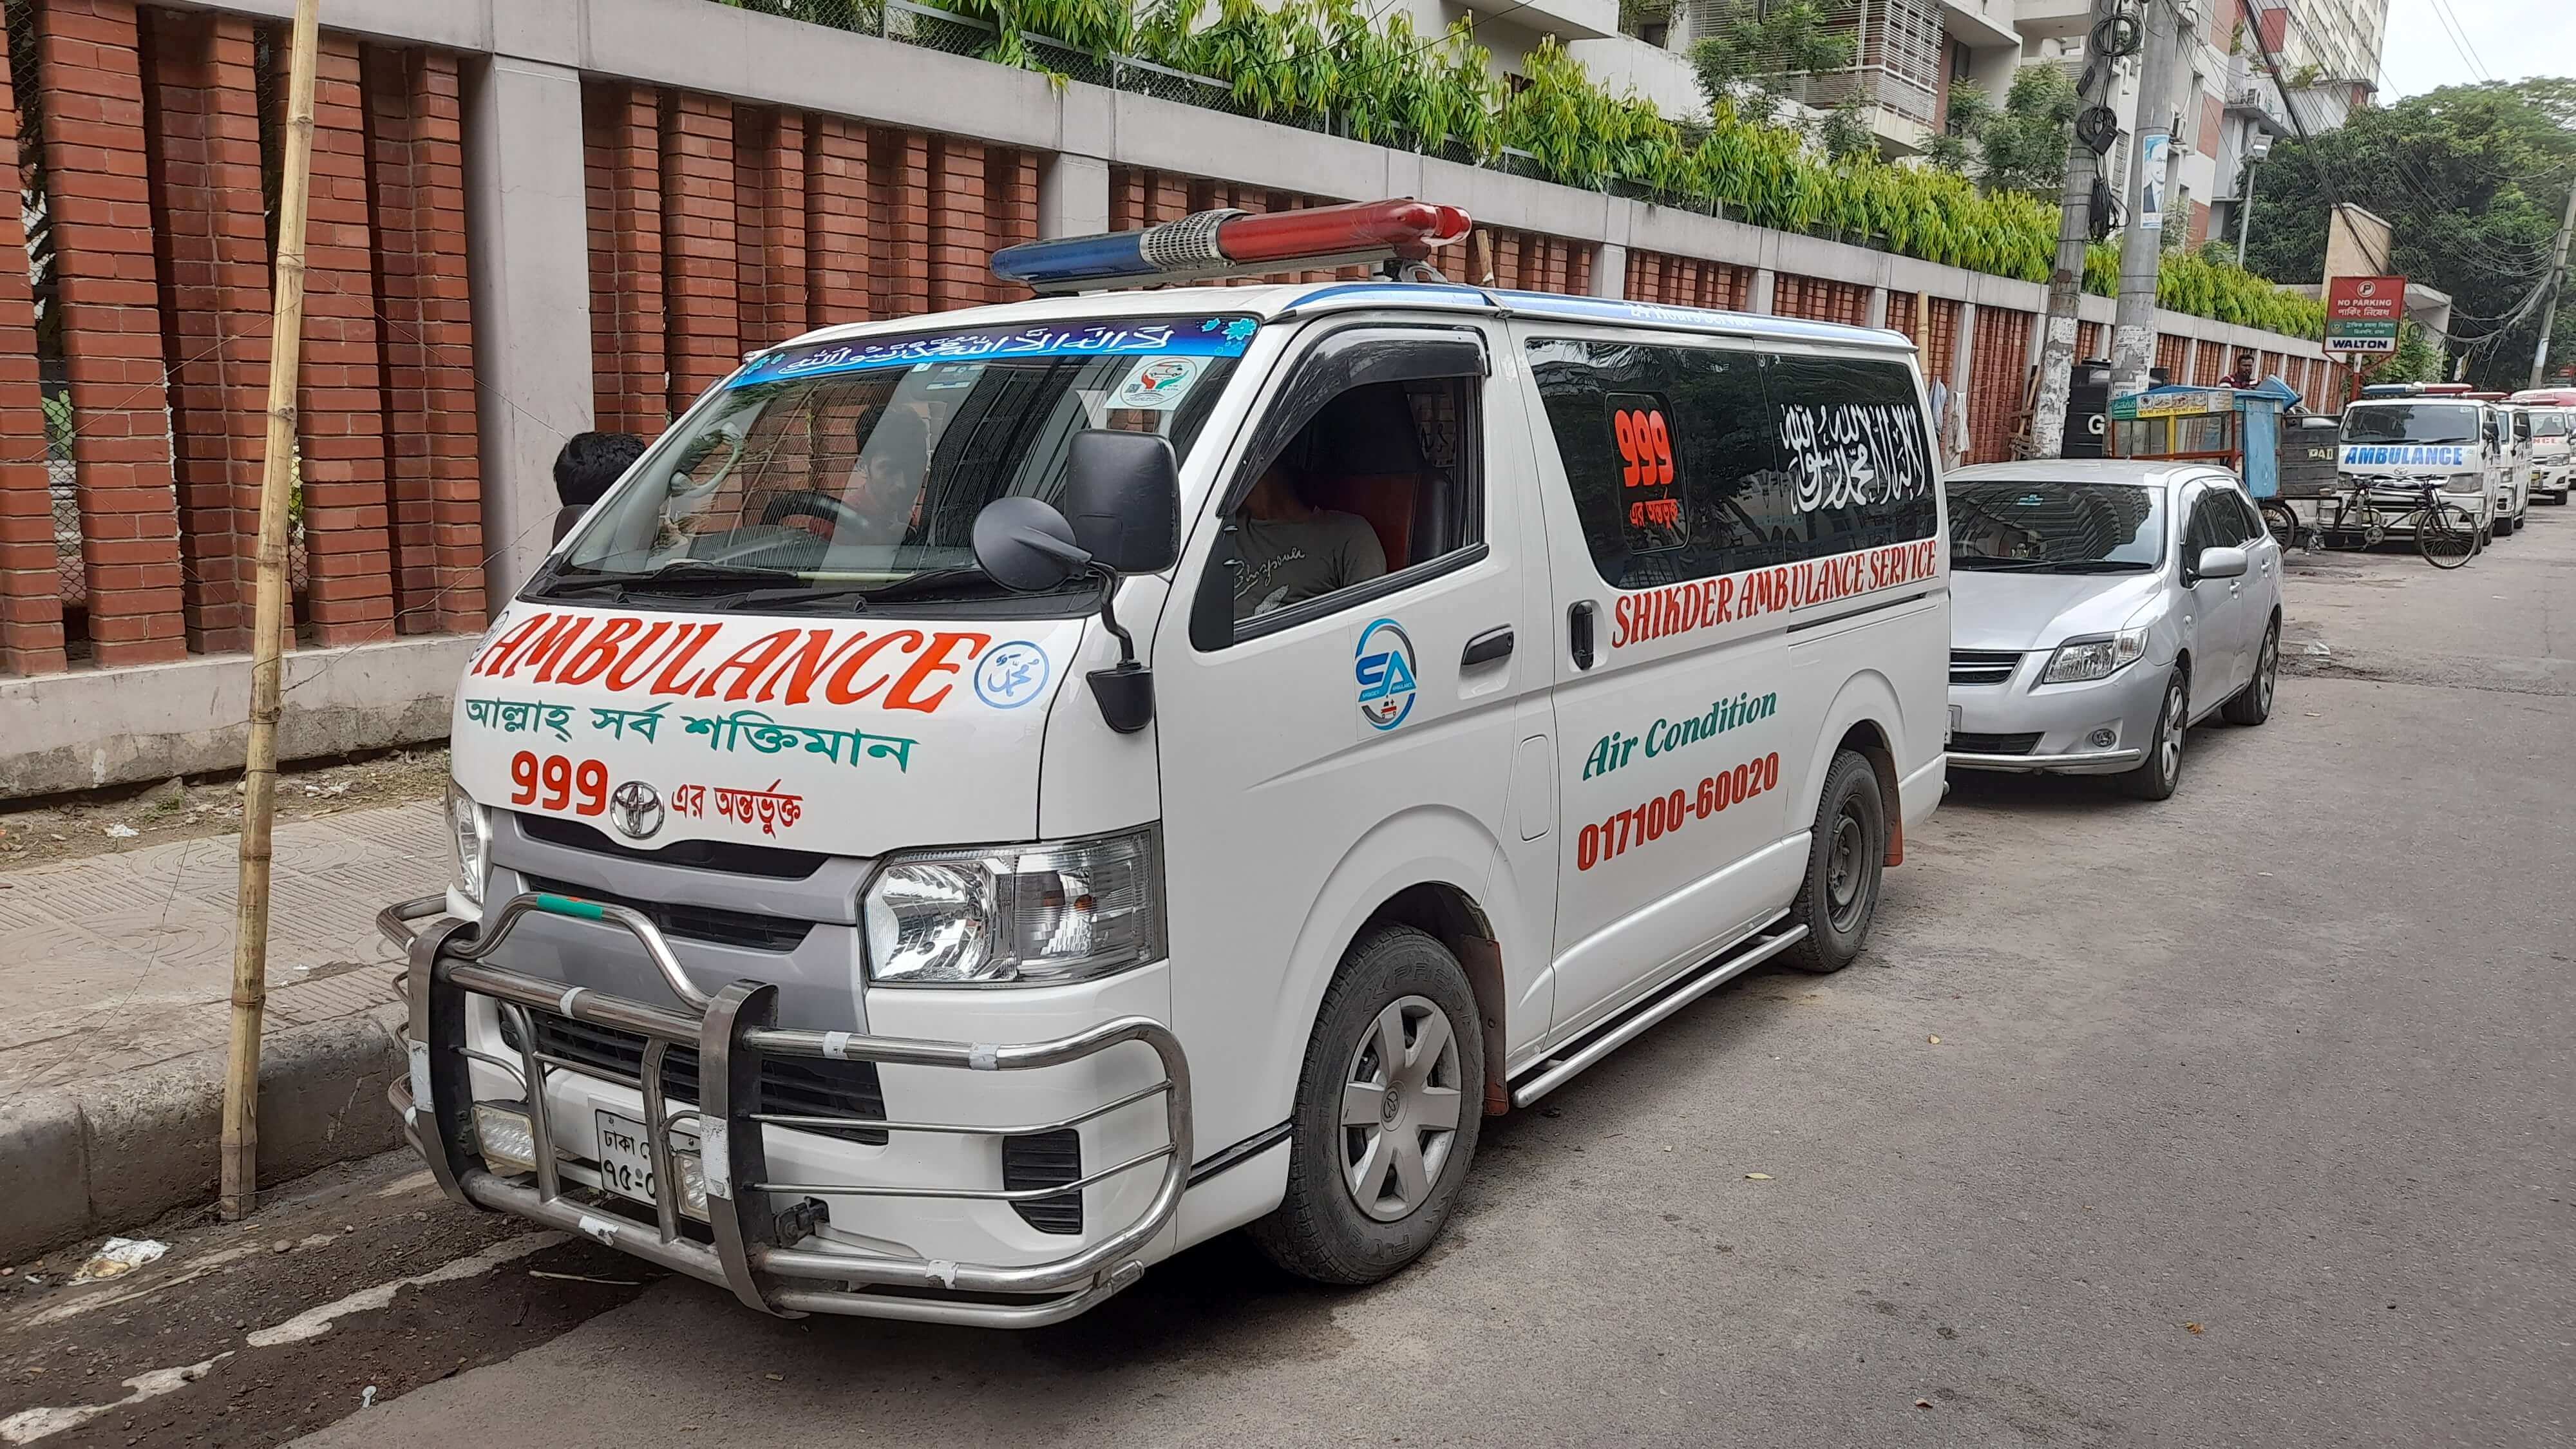 Shikder-Ambulance-service